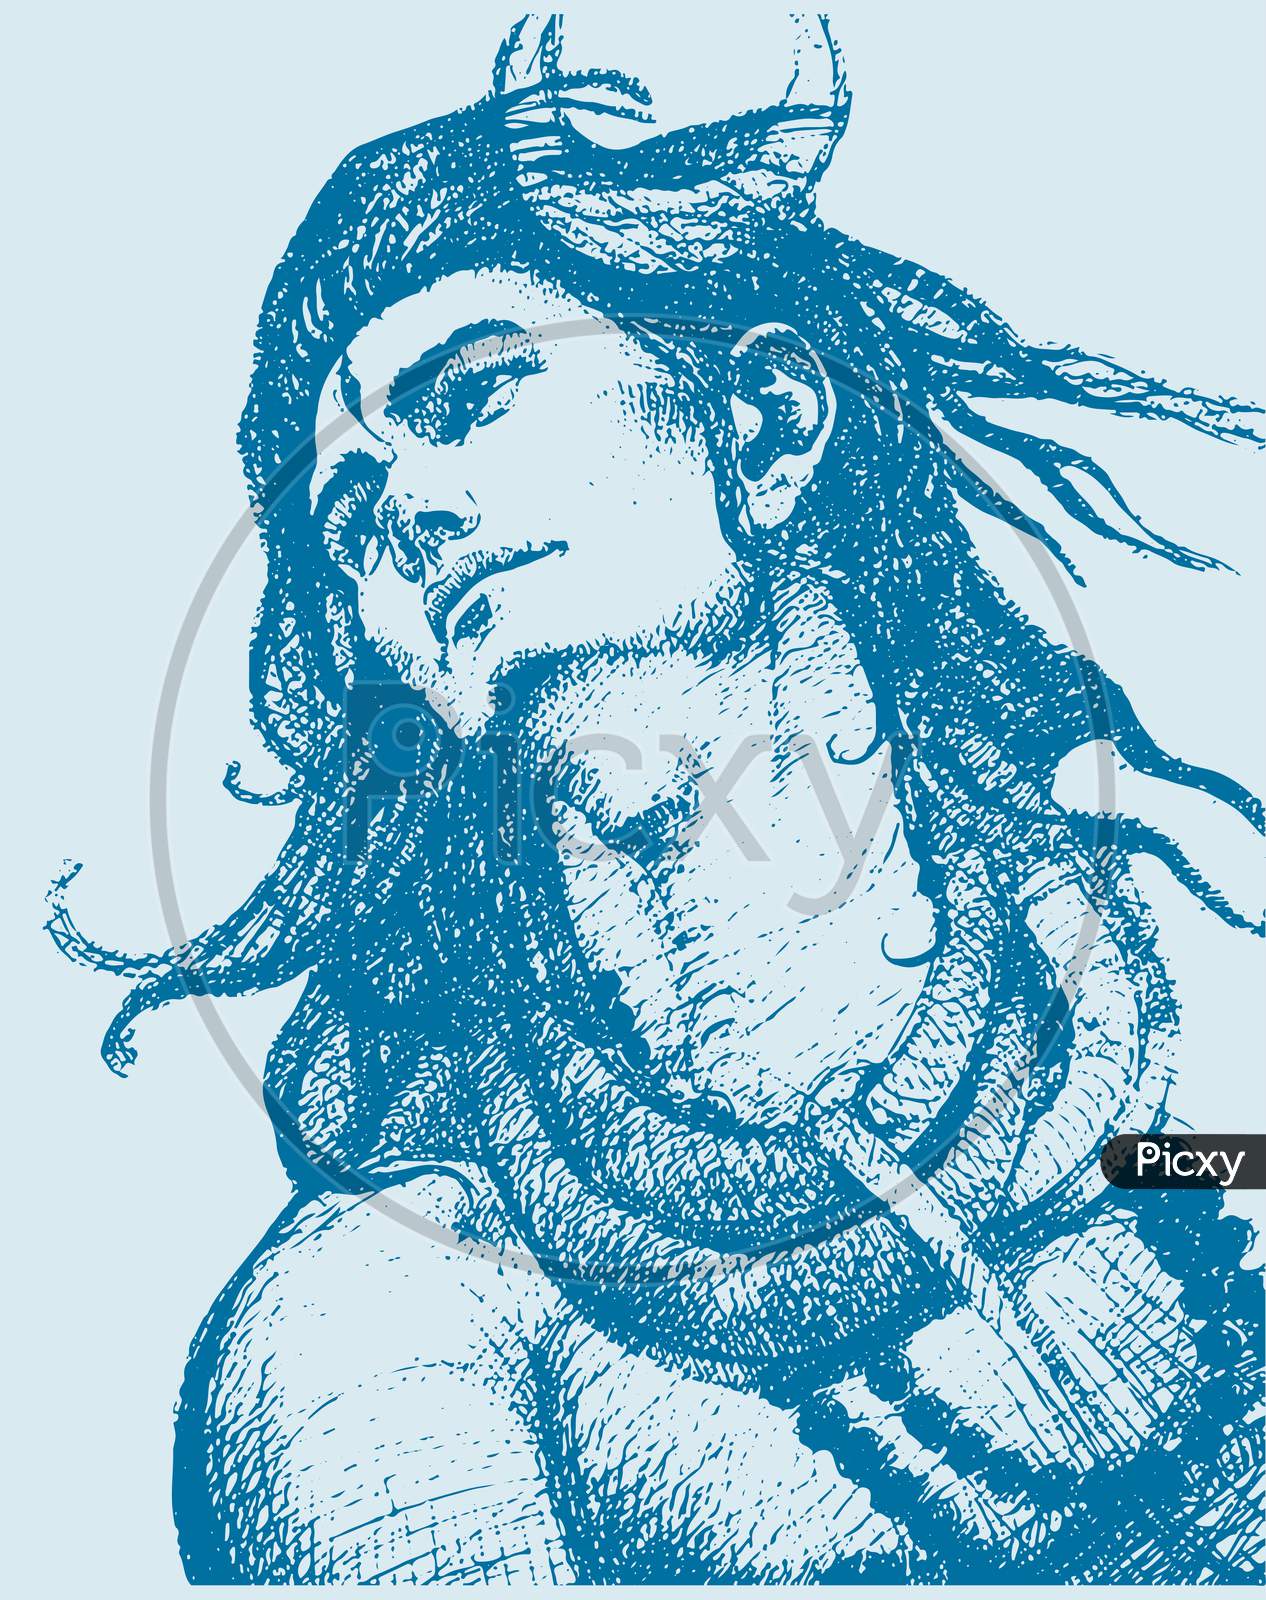 Sketch Of Hindu Famous God Lord Shiva And Symbols Editable Outline Illustration